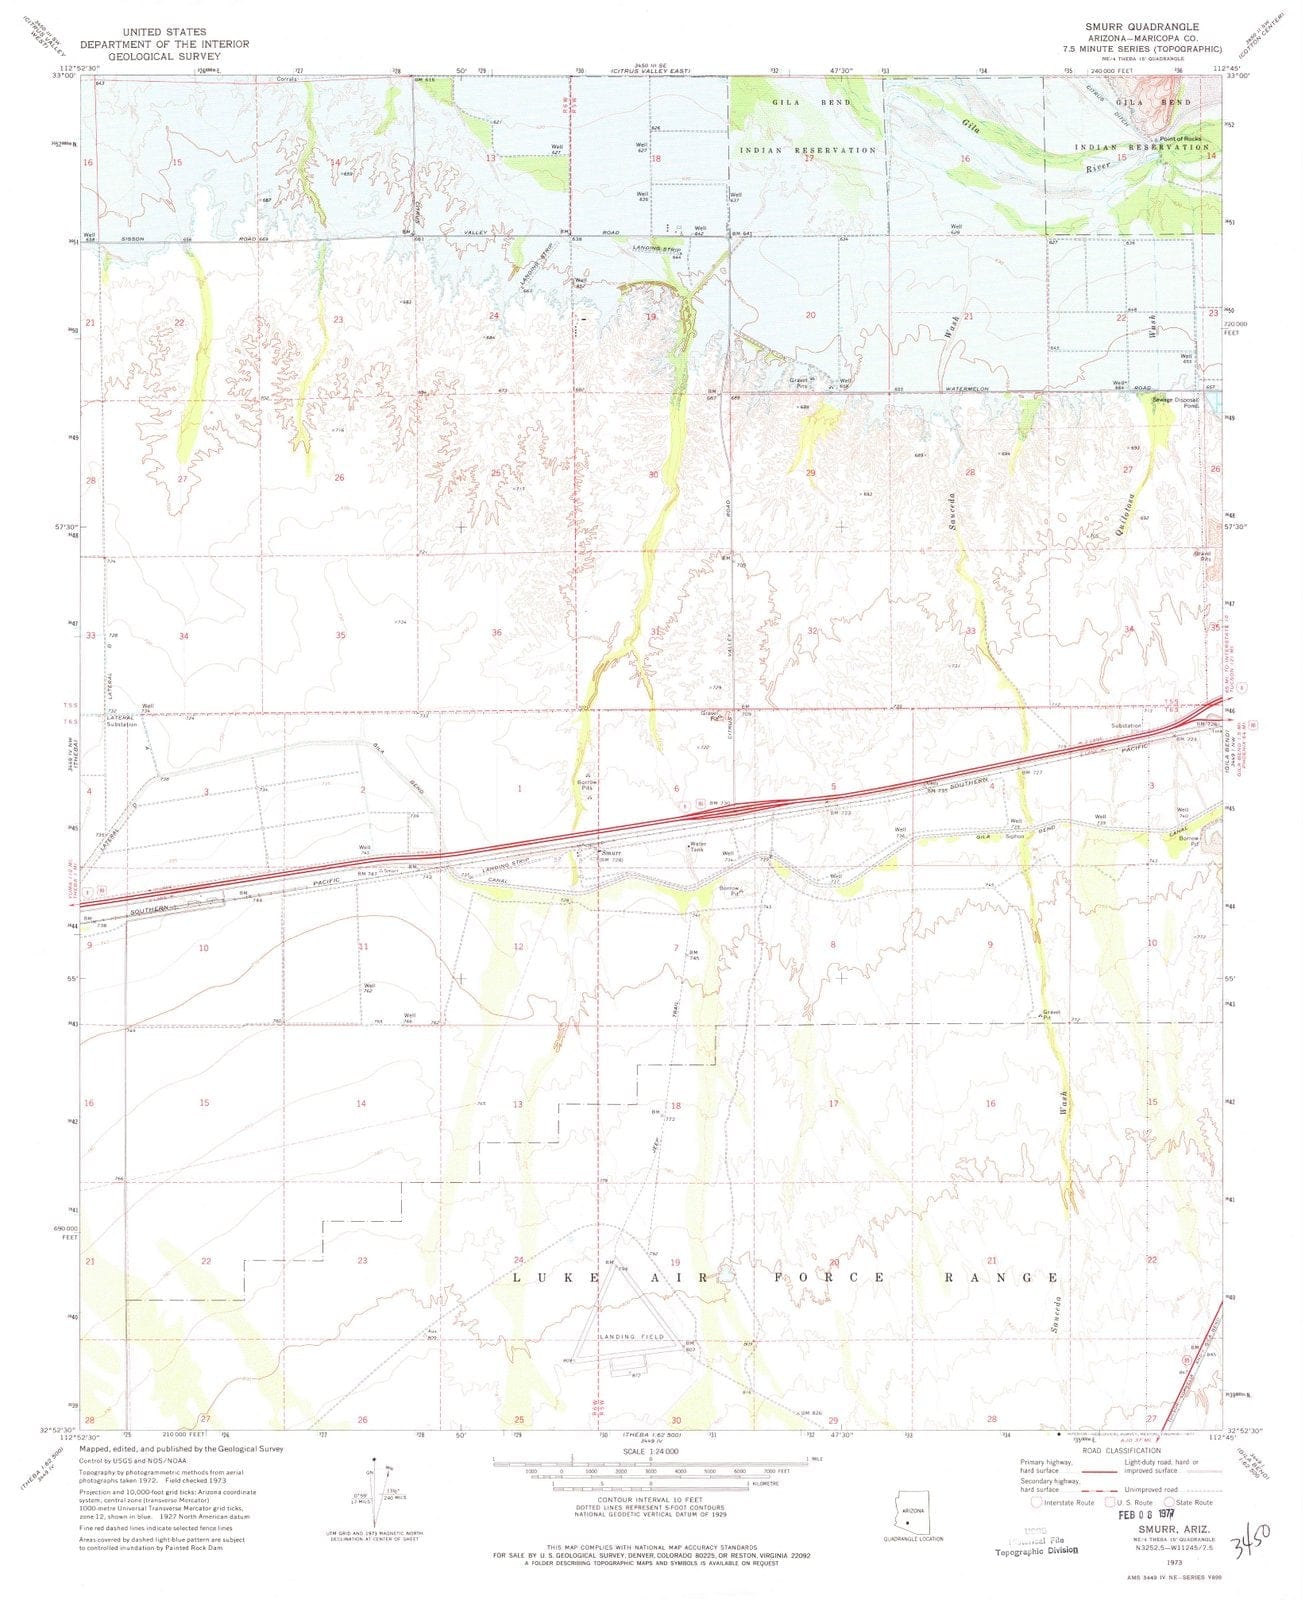 1973 Smurr, AZ - Arizona - USGS Topographic Map